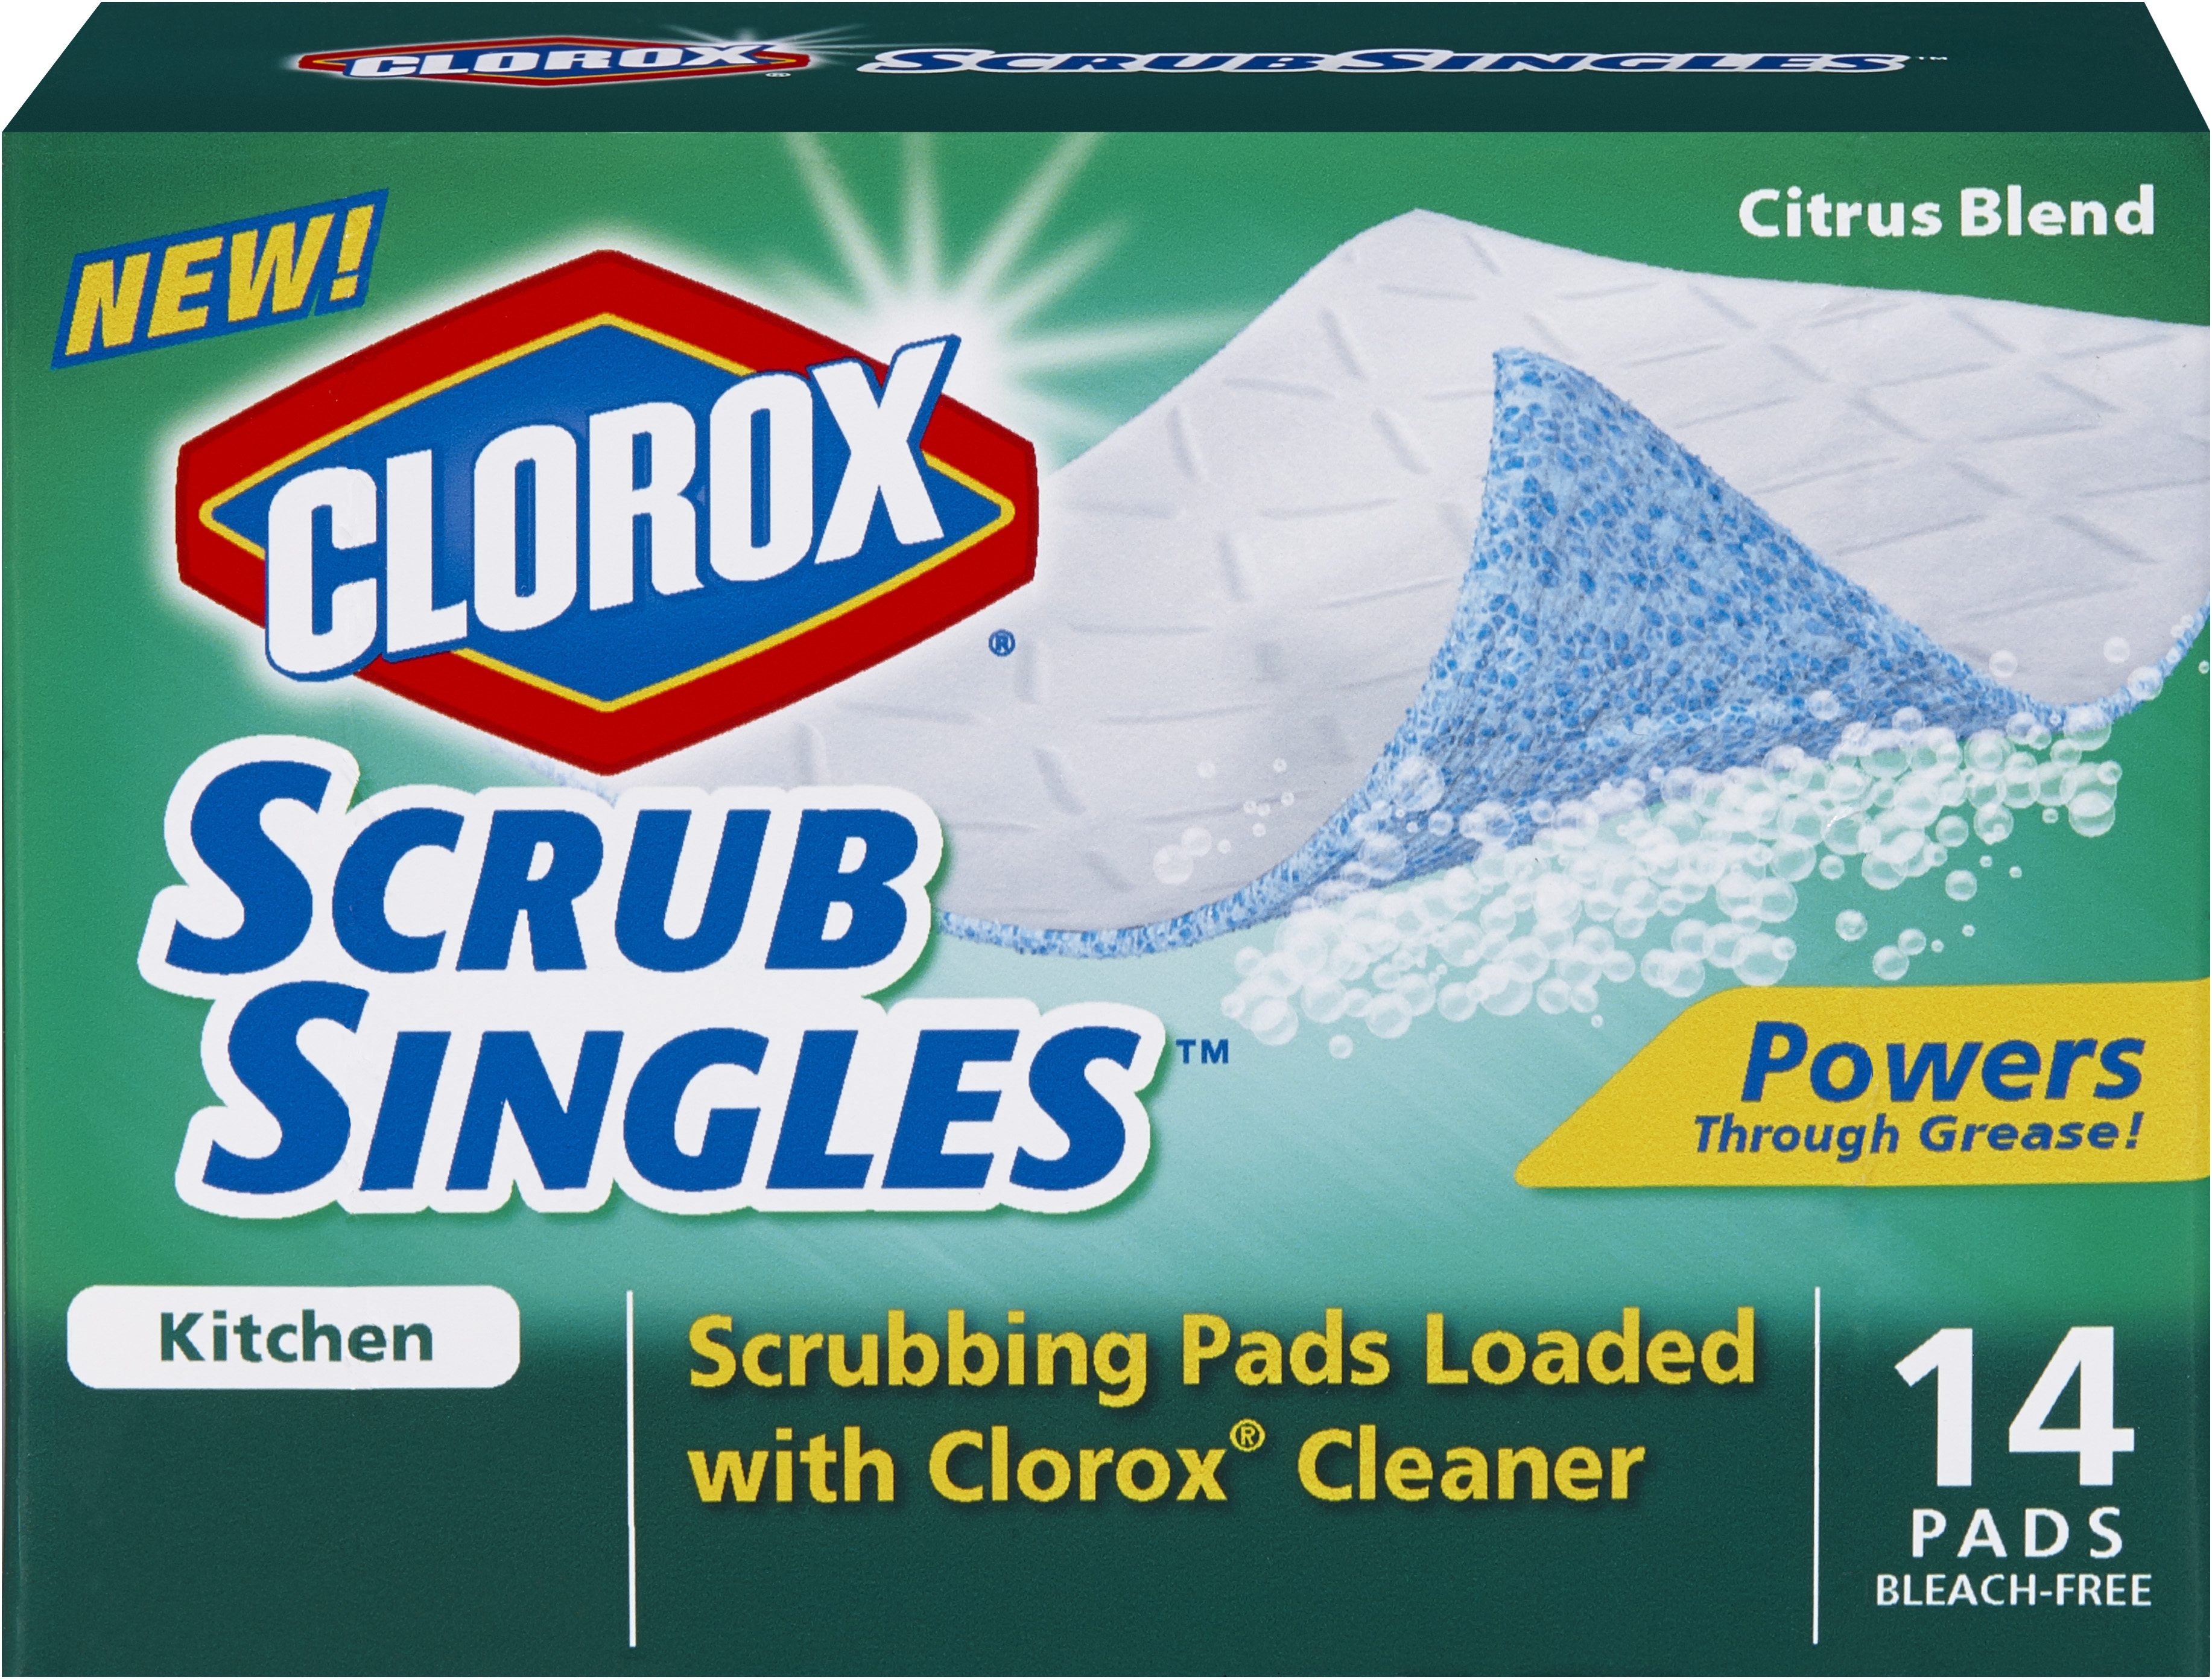 CLOROX ScrubSingle Kitchen pads